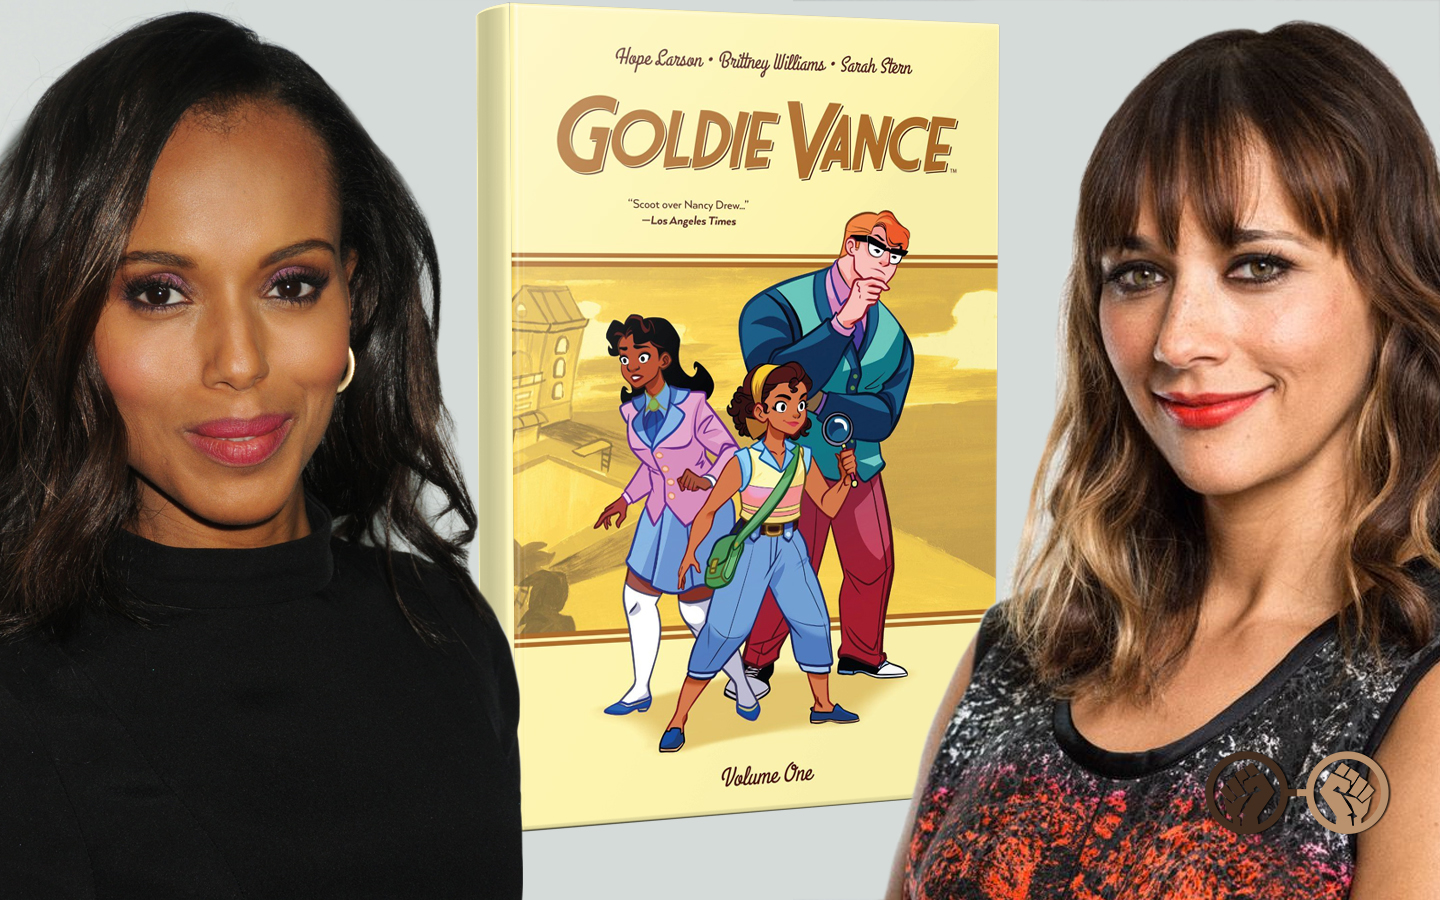 Kerry Washington and Rashida Jones Teaming Up For A Film Adaption of Graphic Novel ‘Goldie Vance’